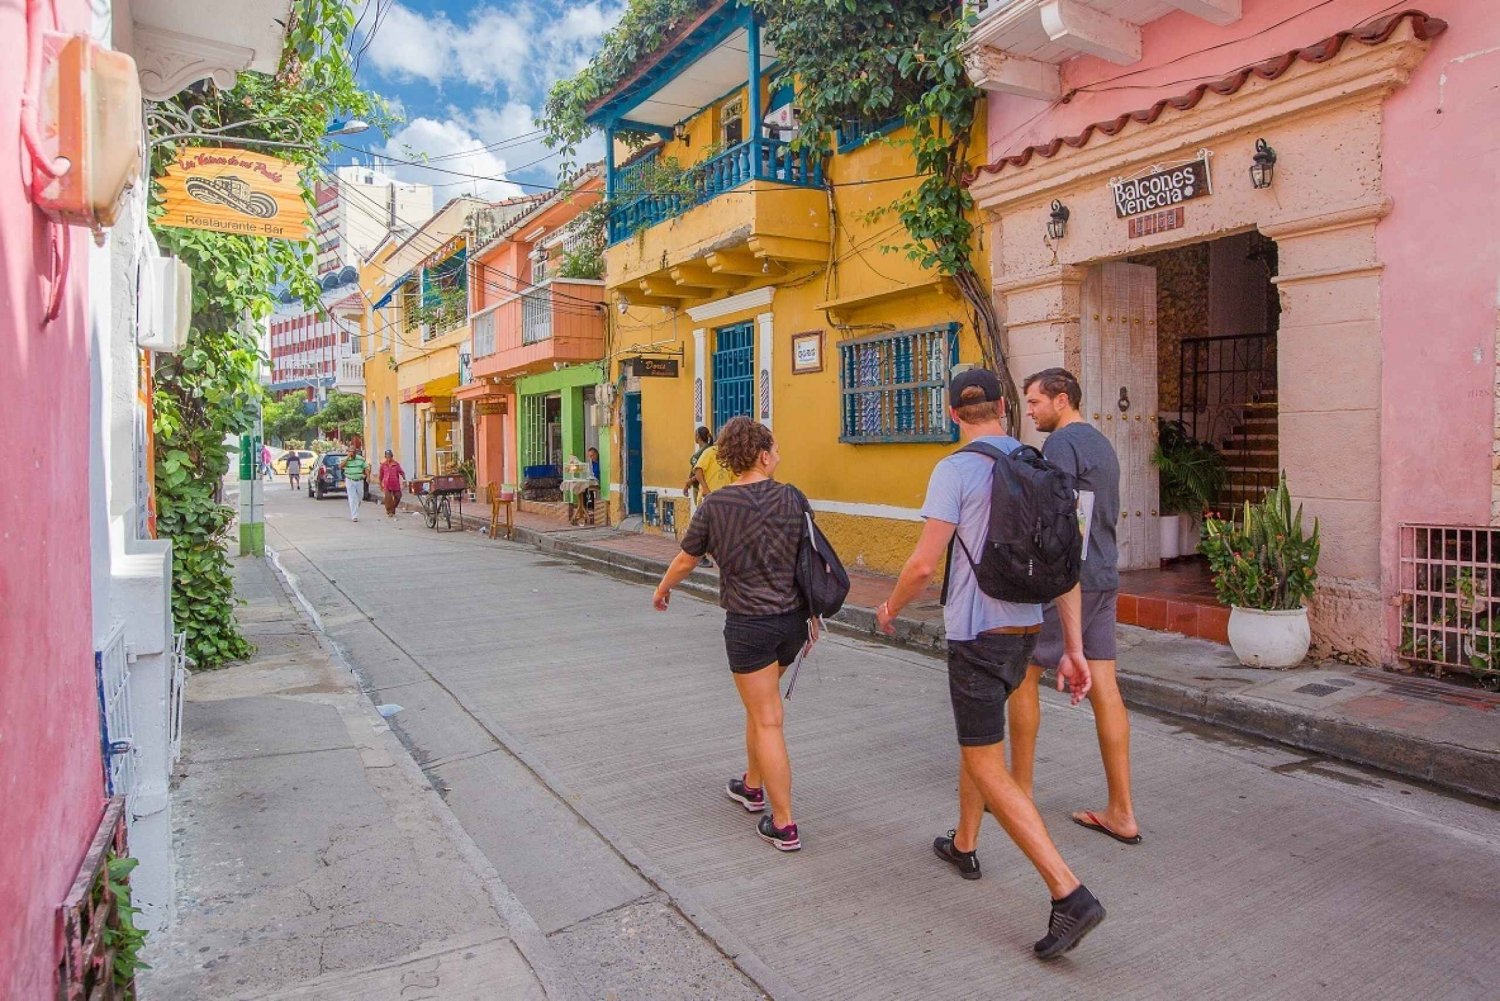 Cartagena: Getsemani Highlights and Graffiti Walking Tour